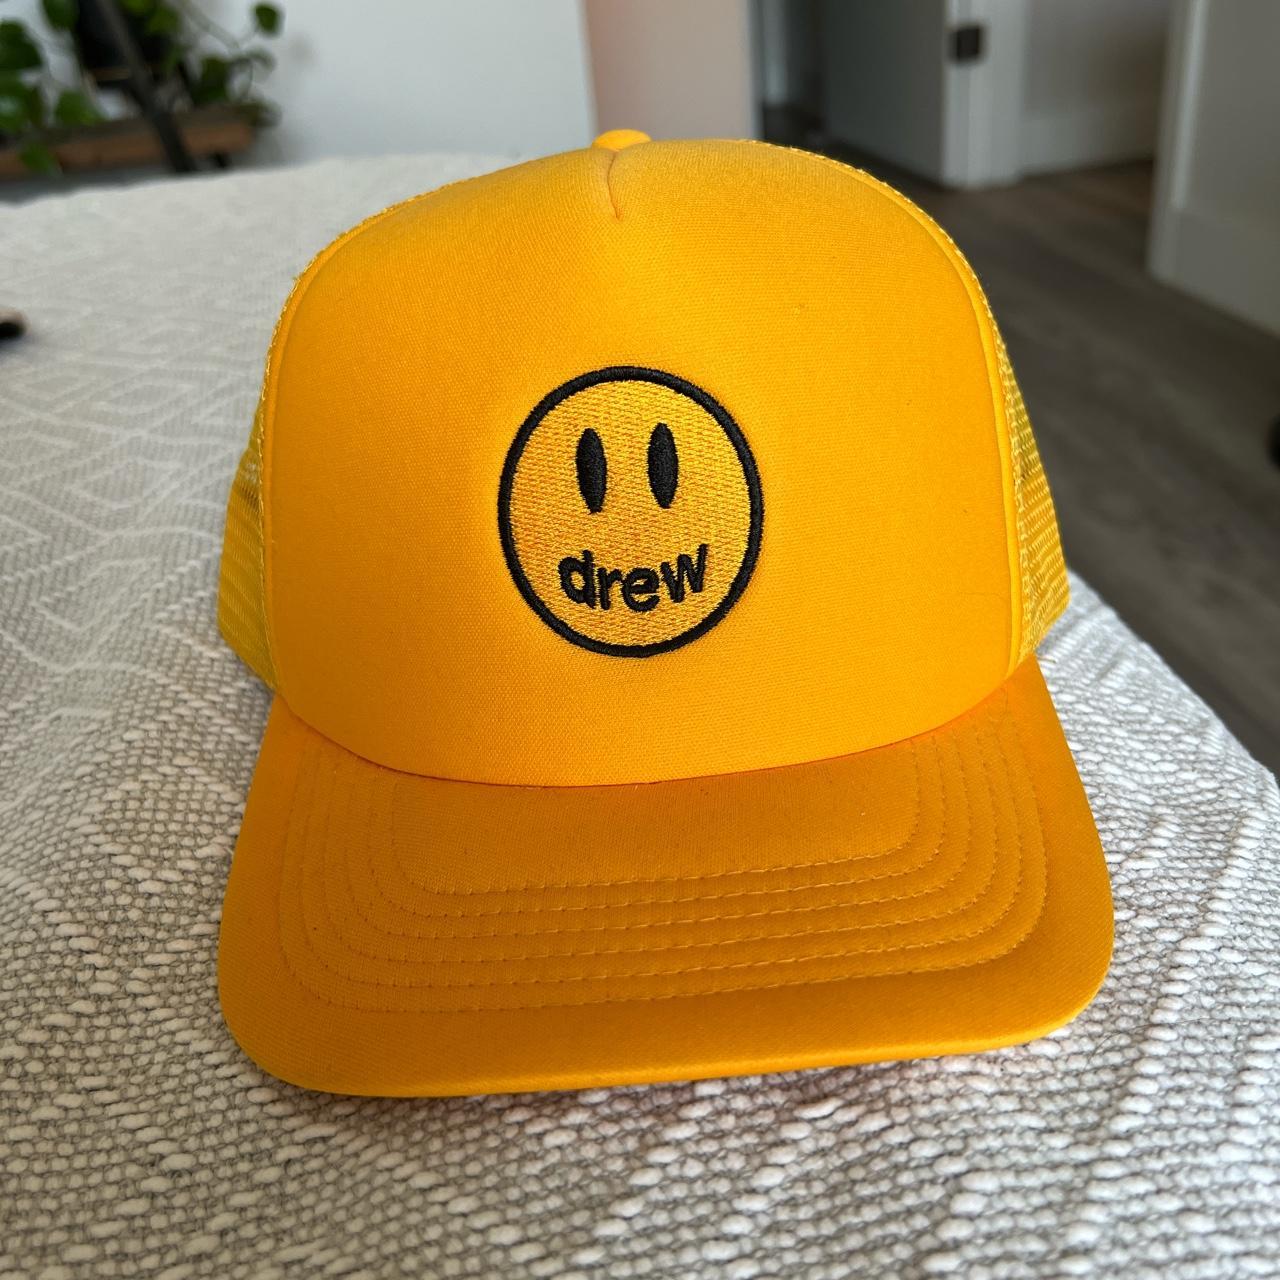 Drew house yellow trucker hat - Drew House